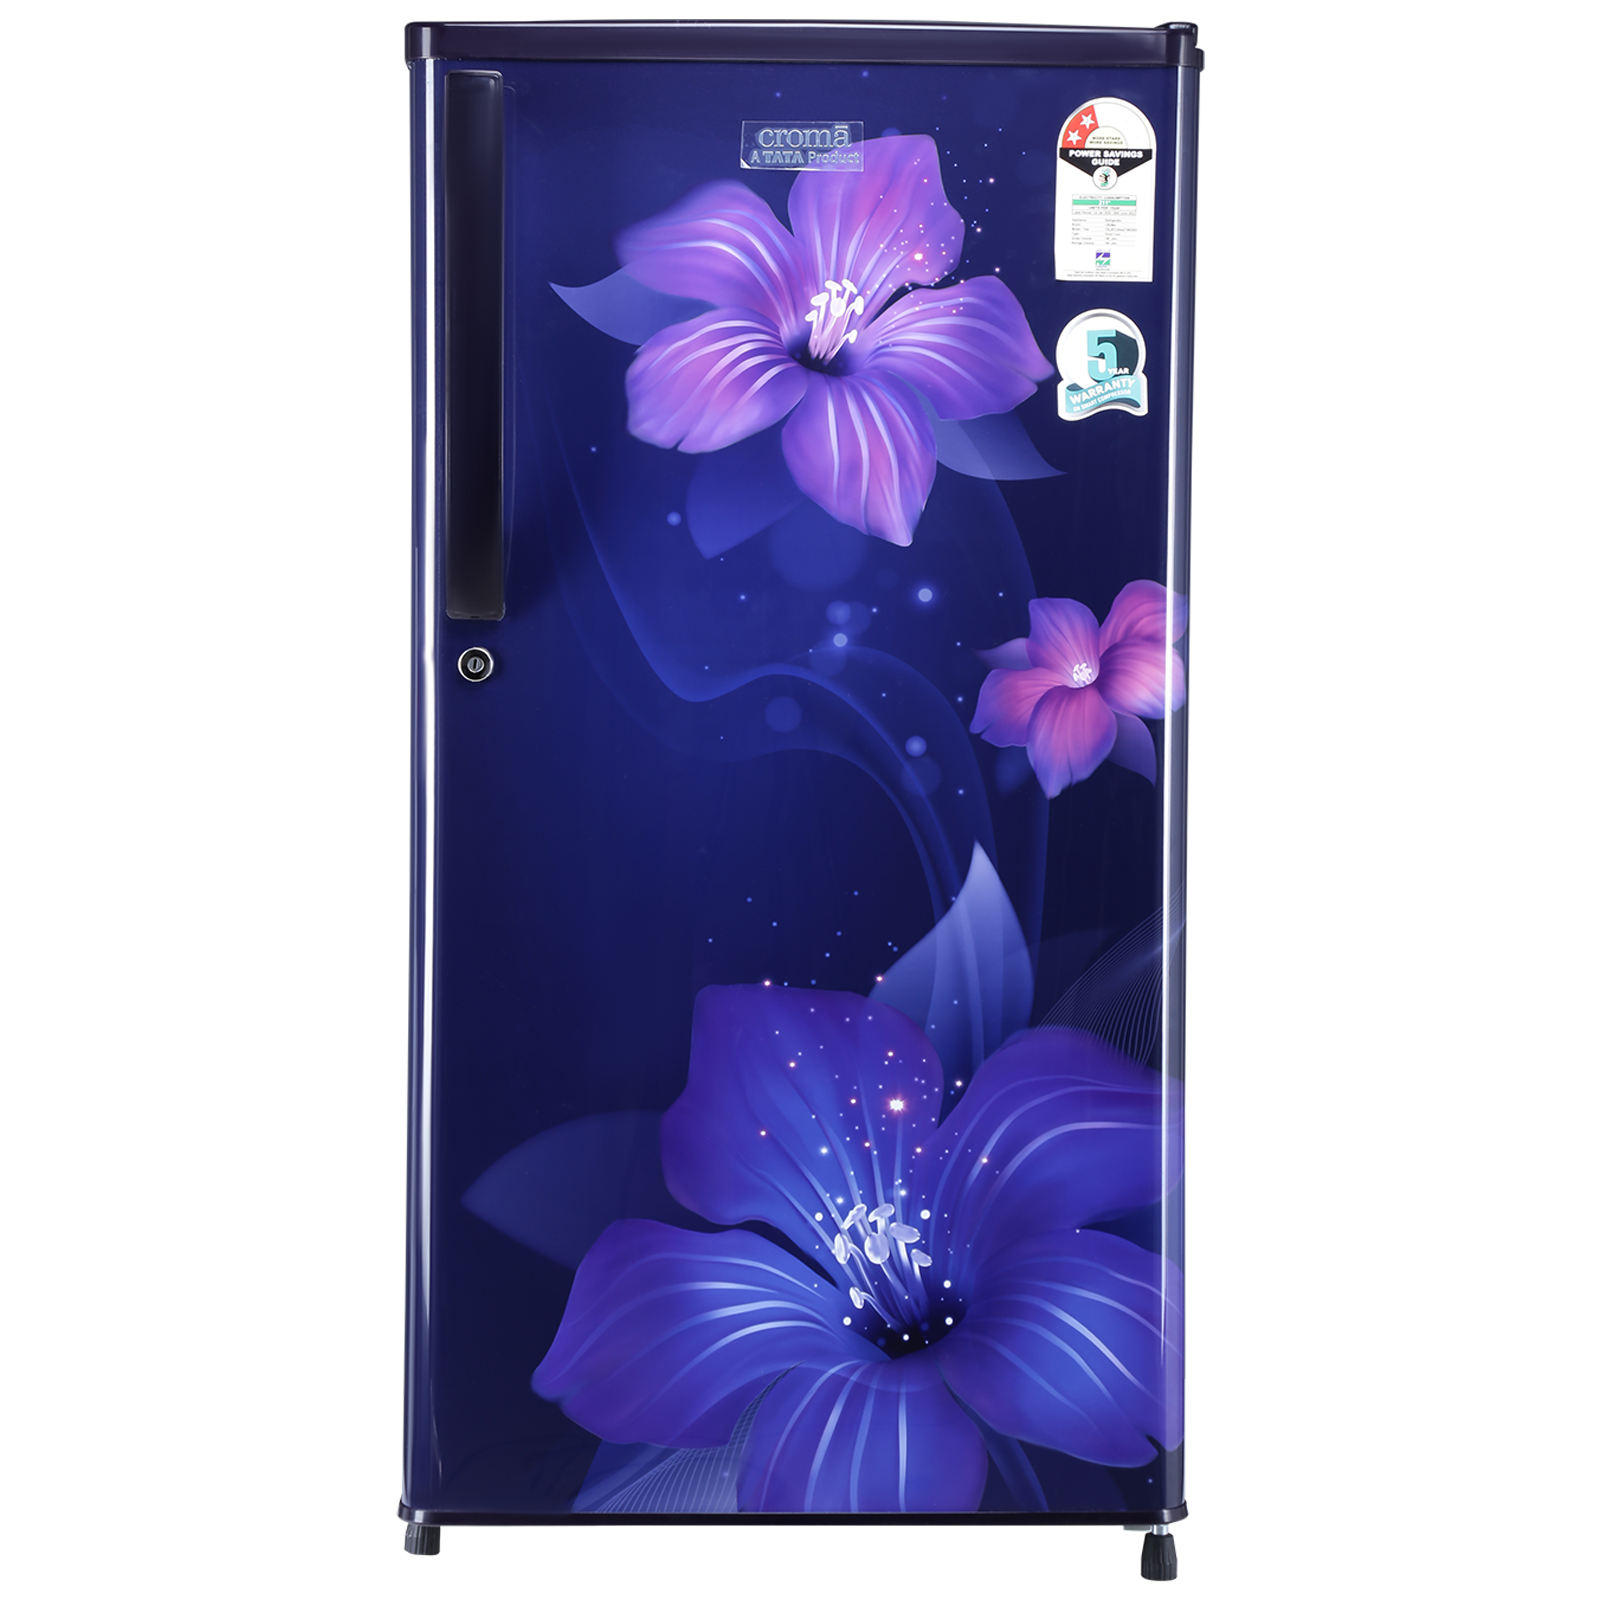 Croma 190 Litres 2 Star Direct Cool Single Door Refrigerator with Antifungal Door Gasket (CRLRFC404sD190, Sharon Blue Floral Pattern)